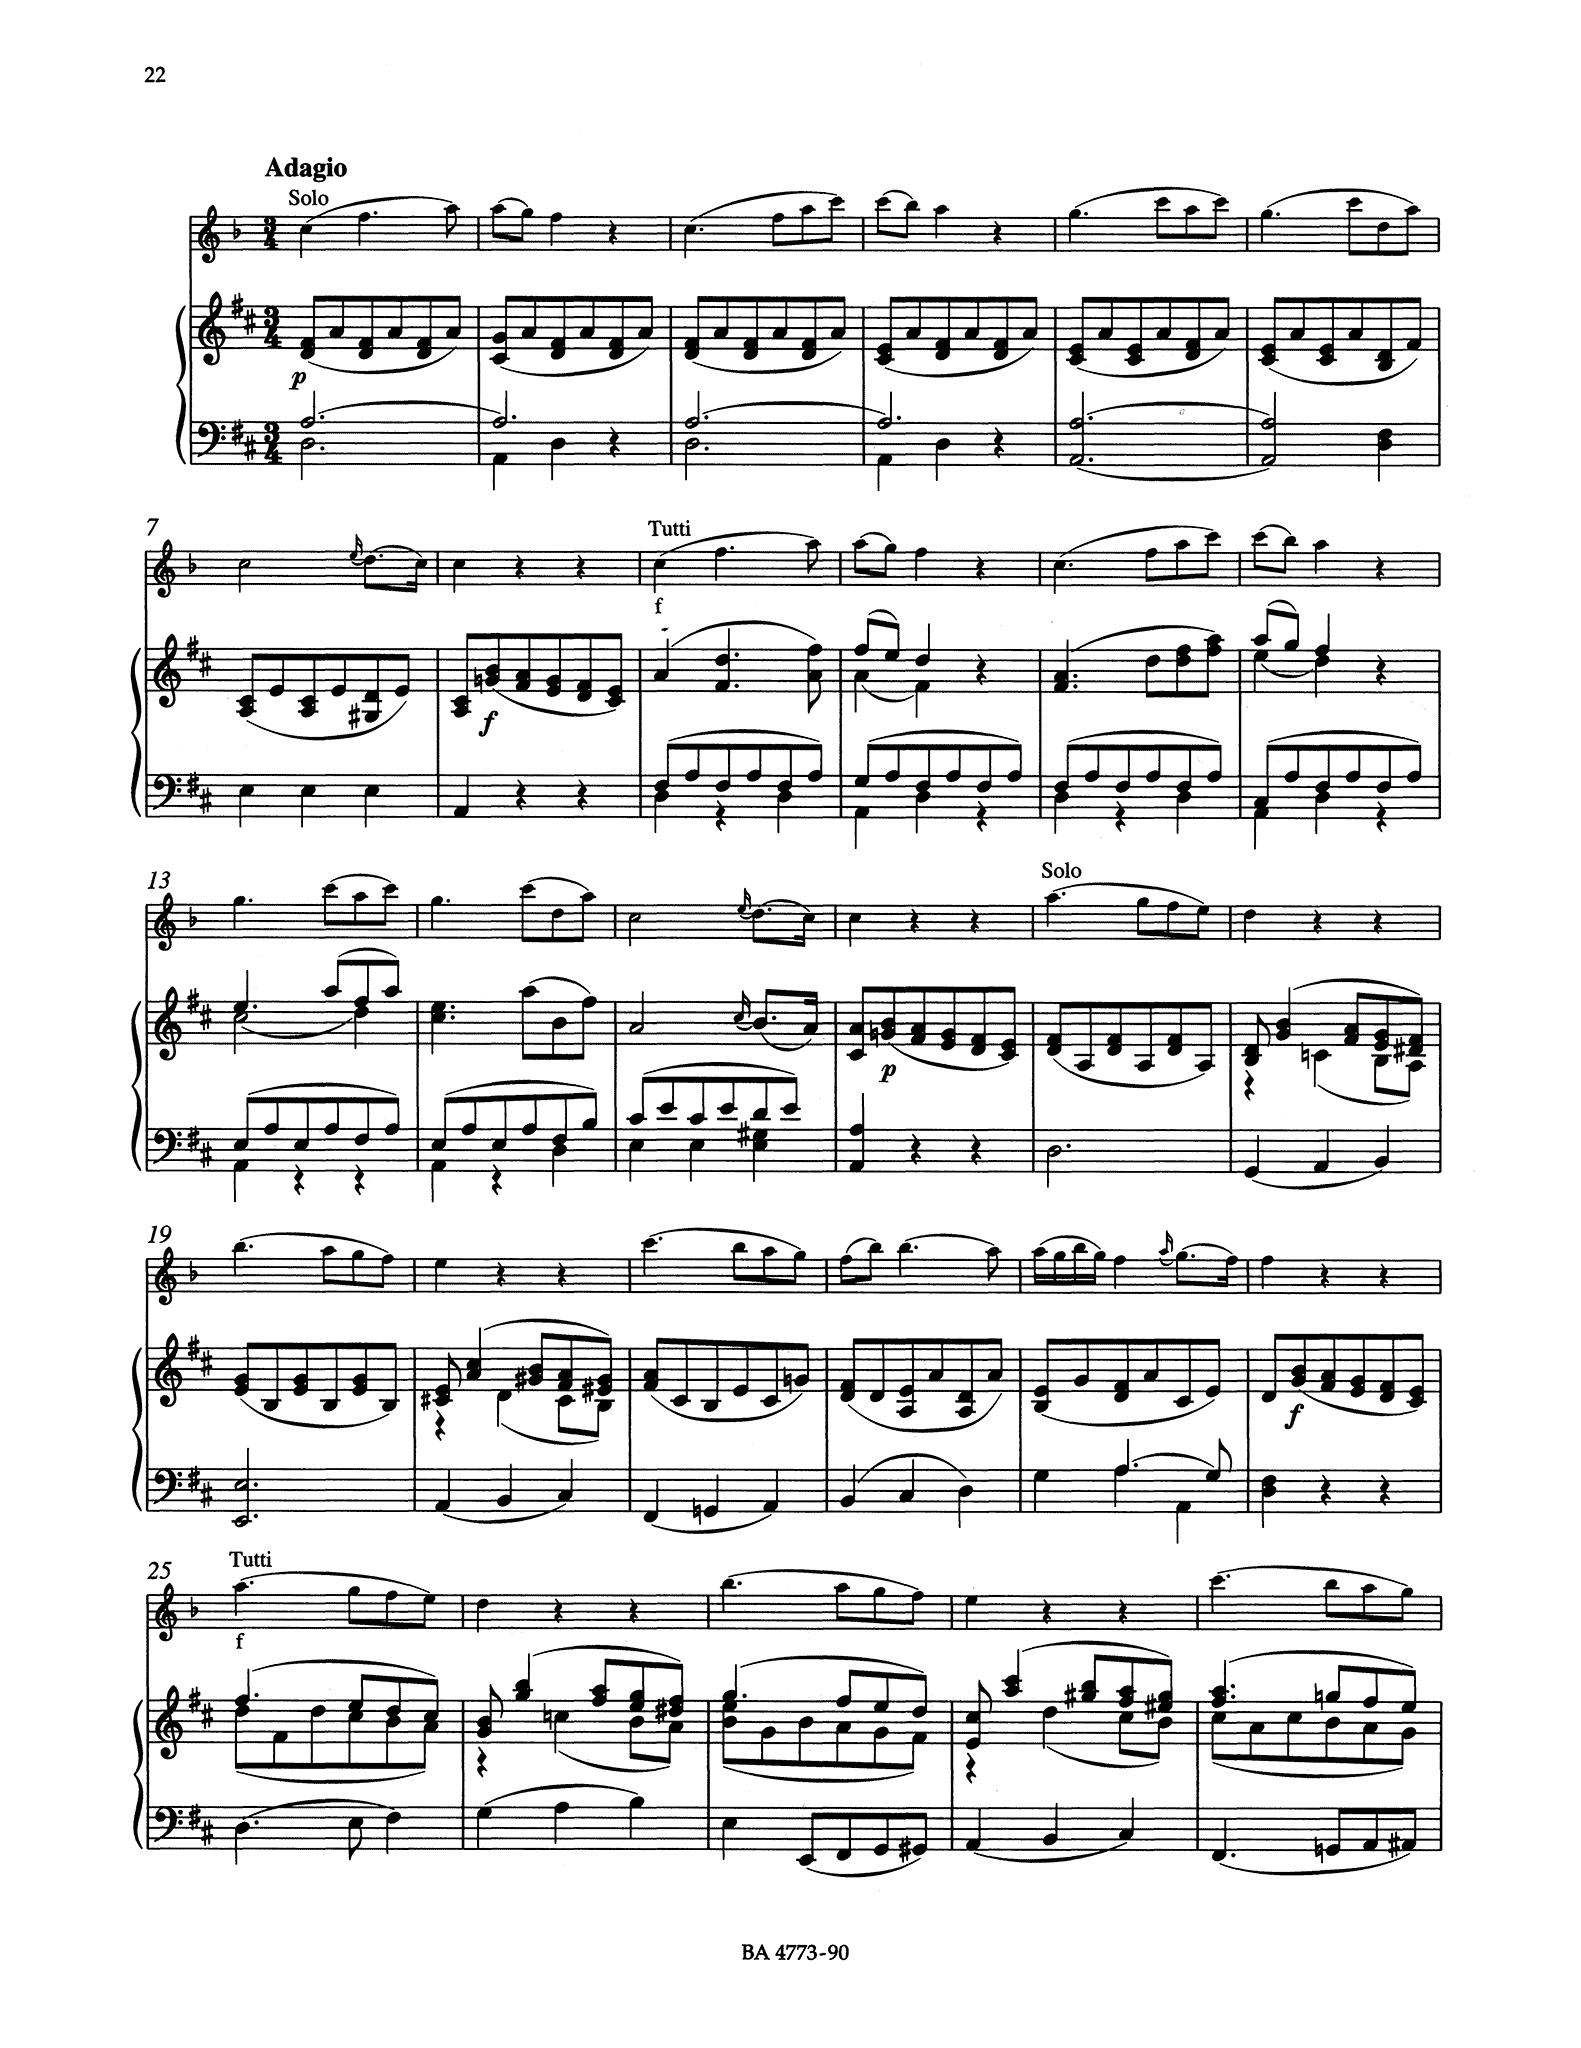 Clarinet Concerto in A Major, K. 622 - Movement 2